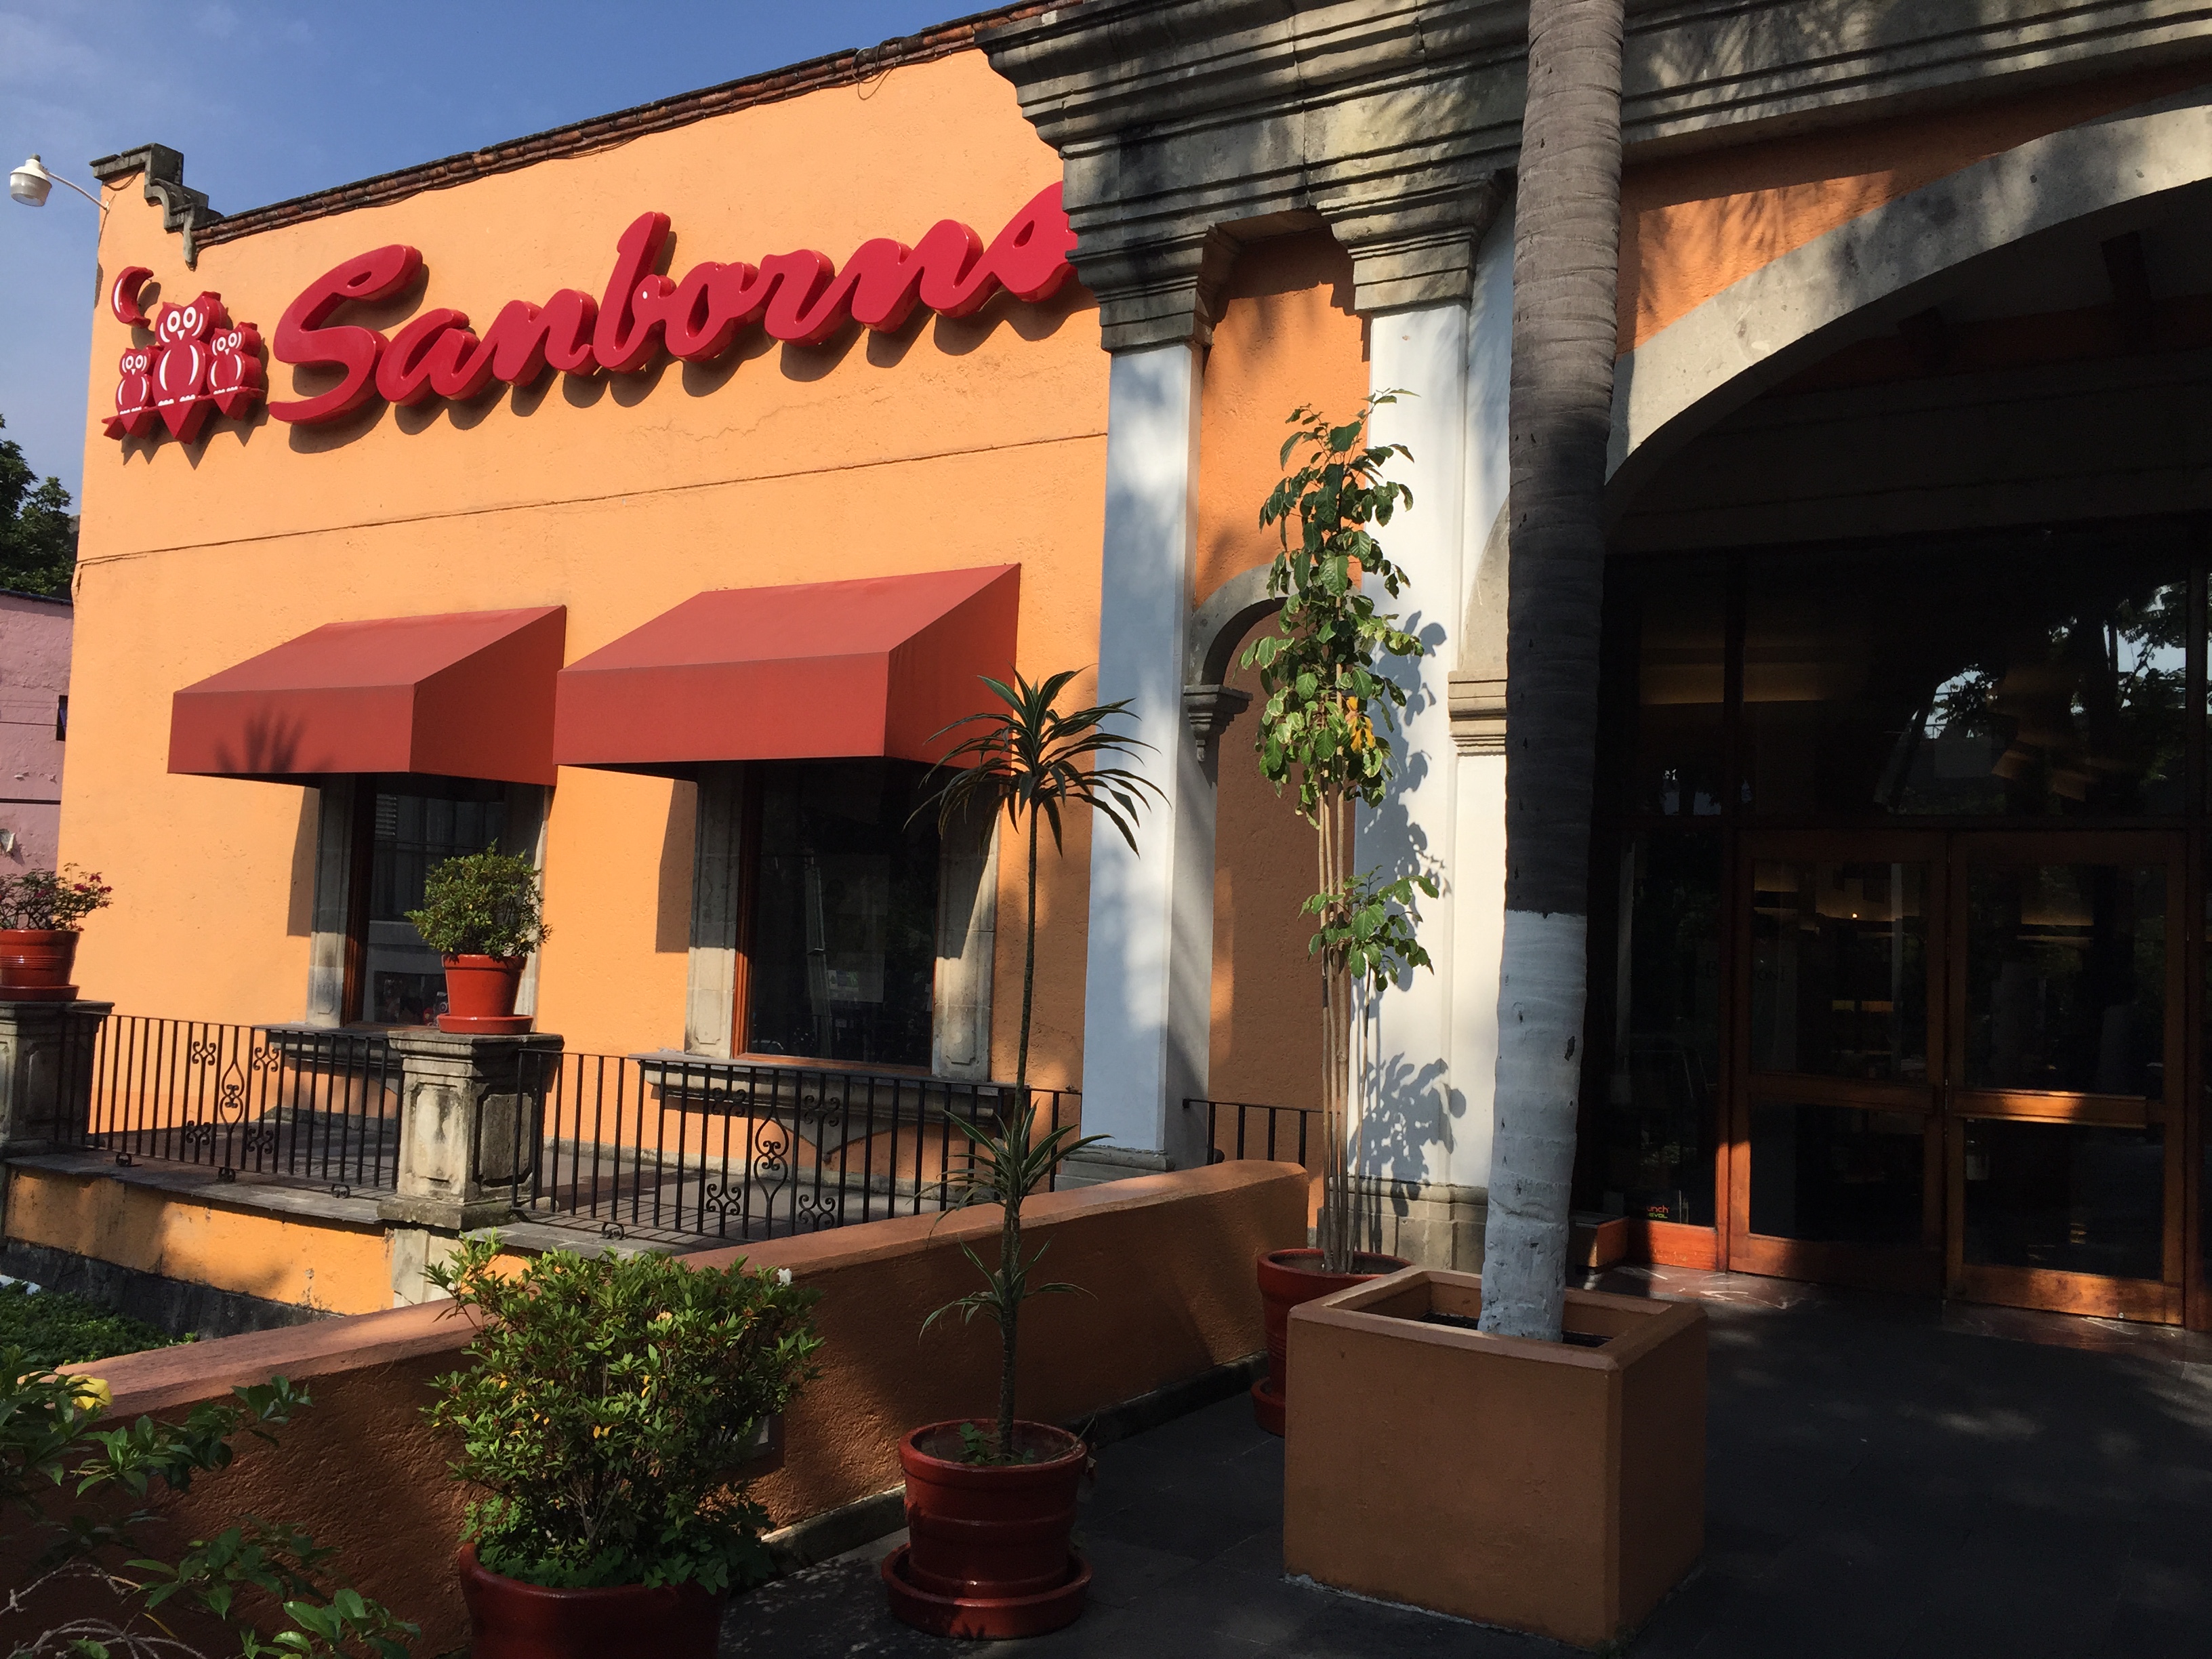 Sanborns Store & Restaurant, Cuernavaca, Mexico